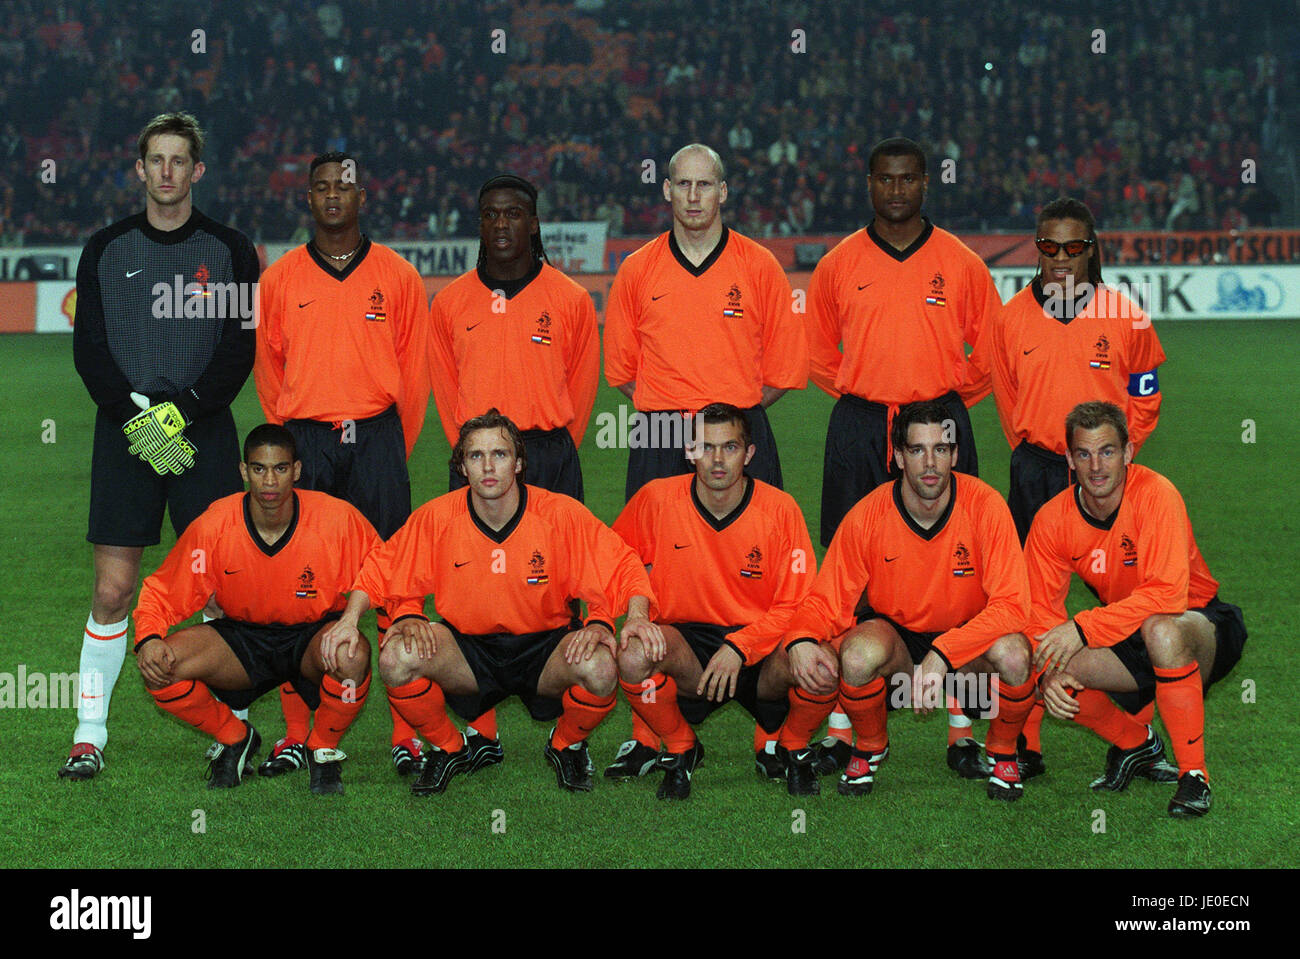 [Imagen: holland-holland-team-group-23-february-2000-JE0ECN.jpg]